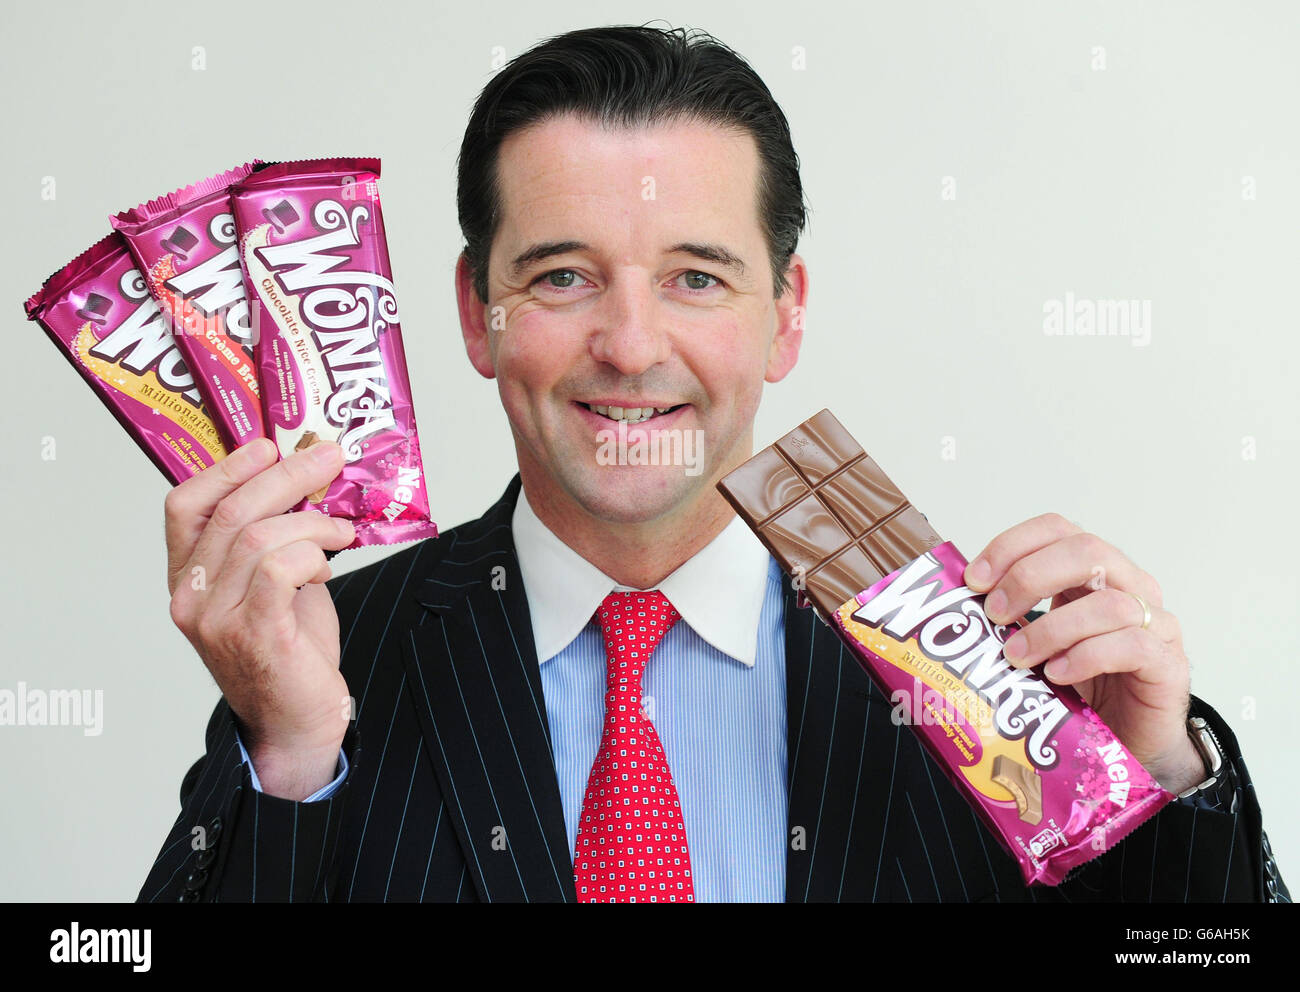 Wonka chocolate bar launch Stock Photo - Alamy